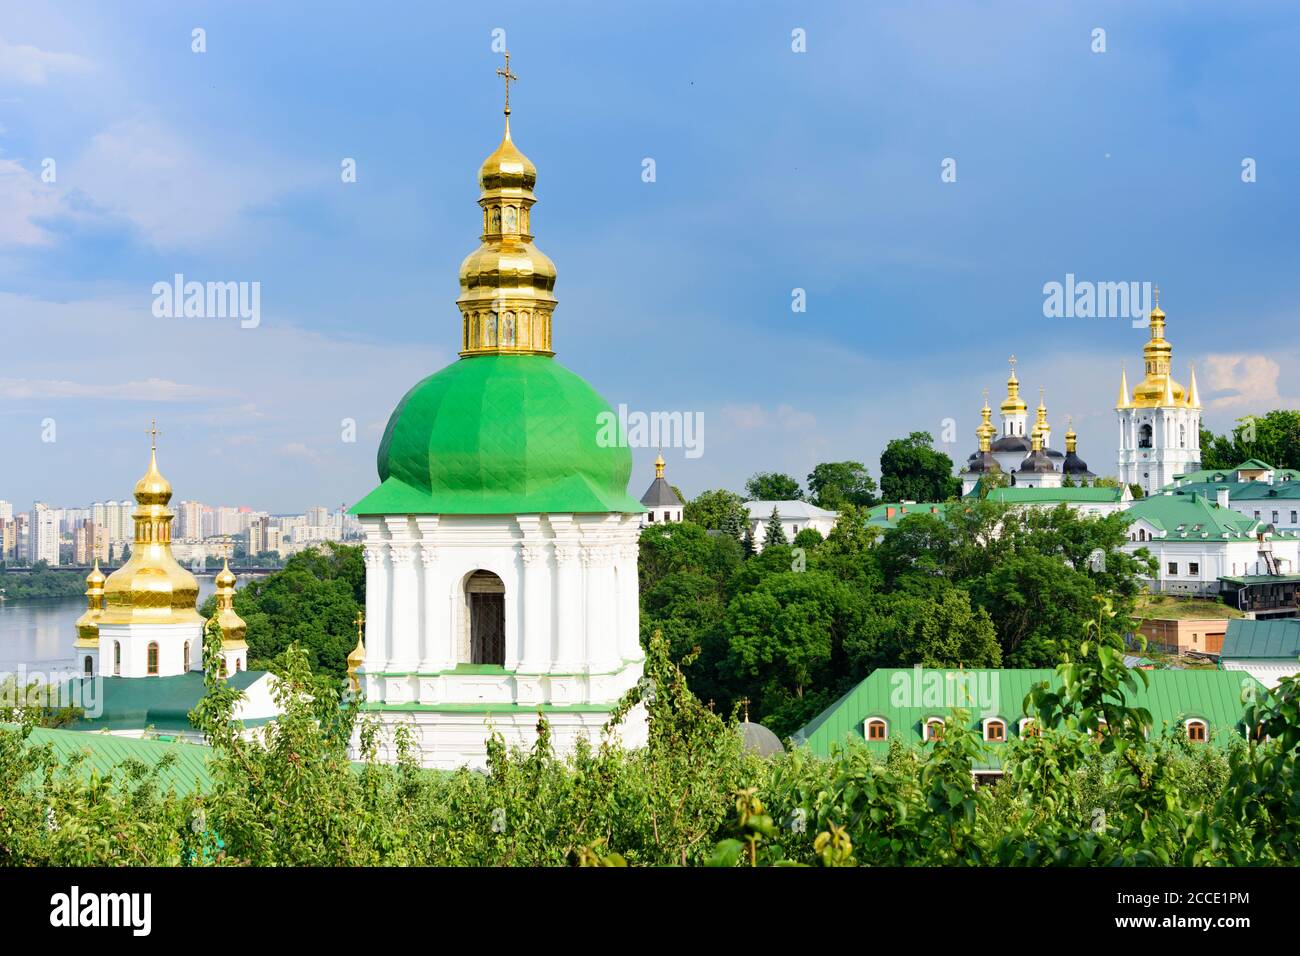 Kiev (Kyiv), churches at Lower Lavra, Pechersk Lavra (Monastery of the Caves), historic Orthodox Christian monastery, river Dnipro (Dnieper), apartmen Stock Photo